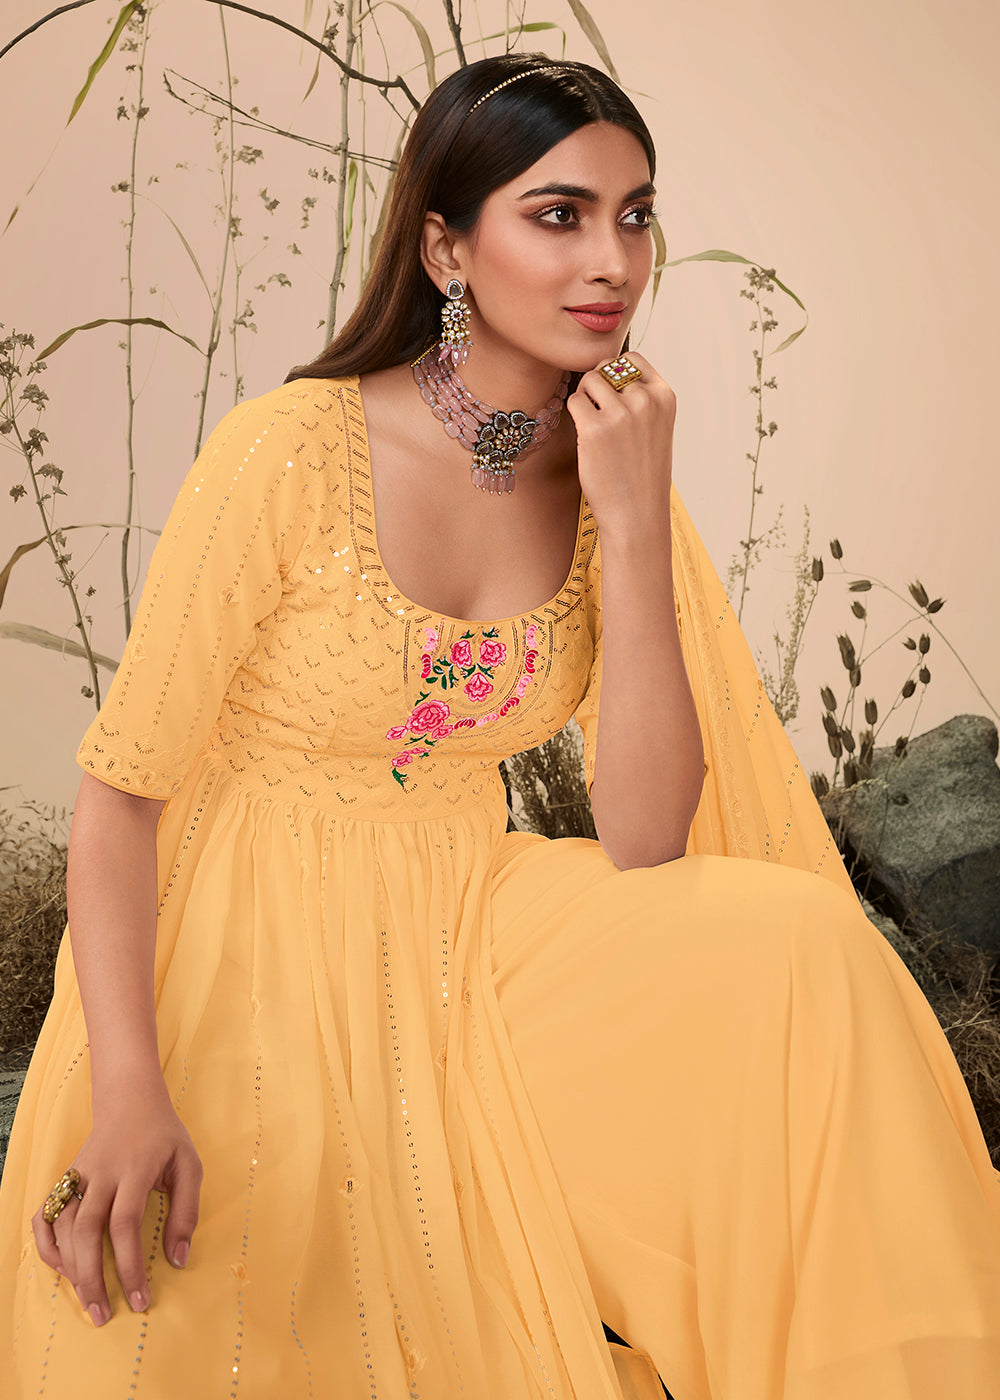 Buy Now Splendid Festive Yellow Georgette Palazzo Salwar Suit Online in USA, UK, Canada, Germany, Australia & Worldwide at Empress Clothing.